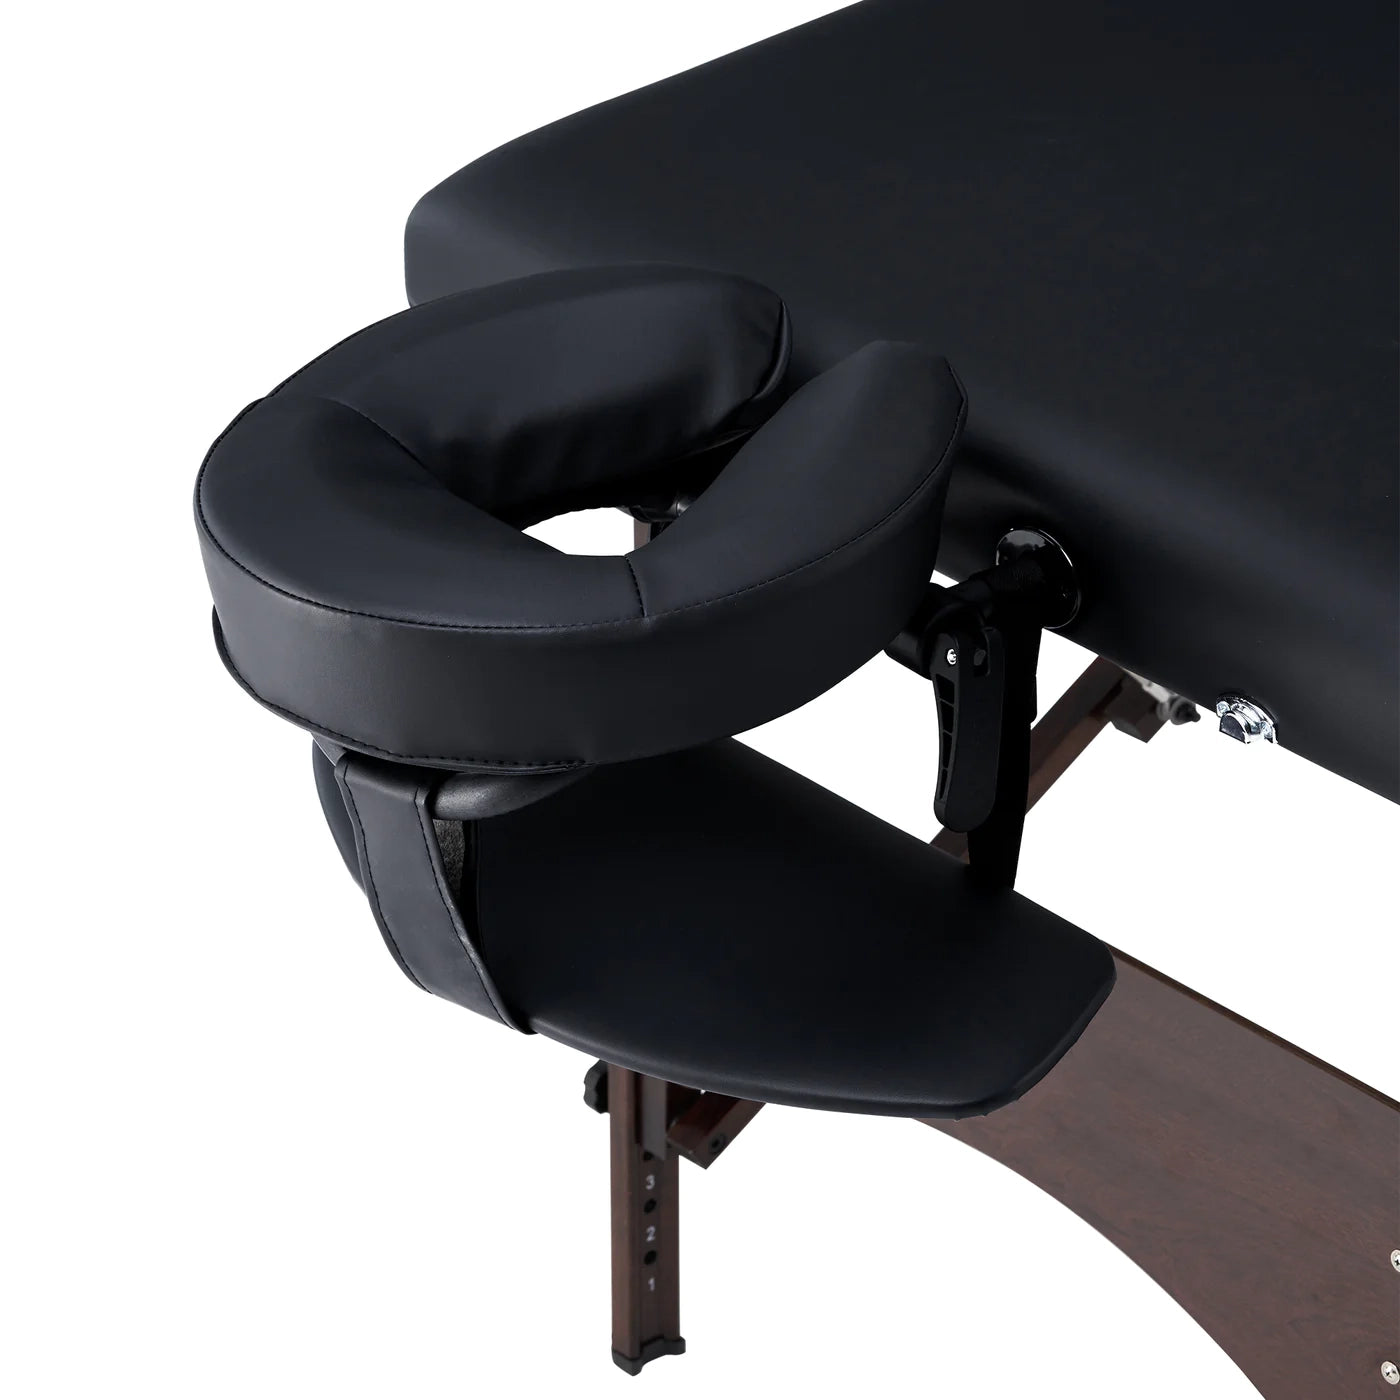 Bella2bello 28" Argo Portable Massage Table Package in Black Upholstery, Walnut Legs